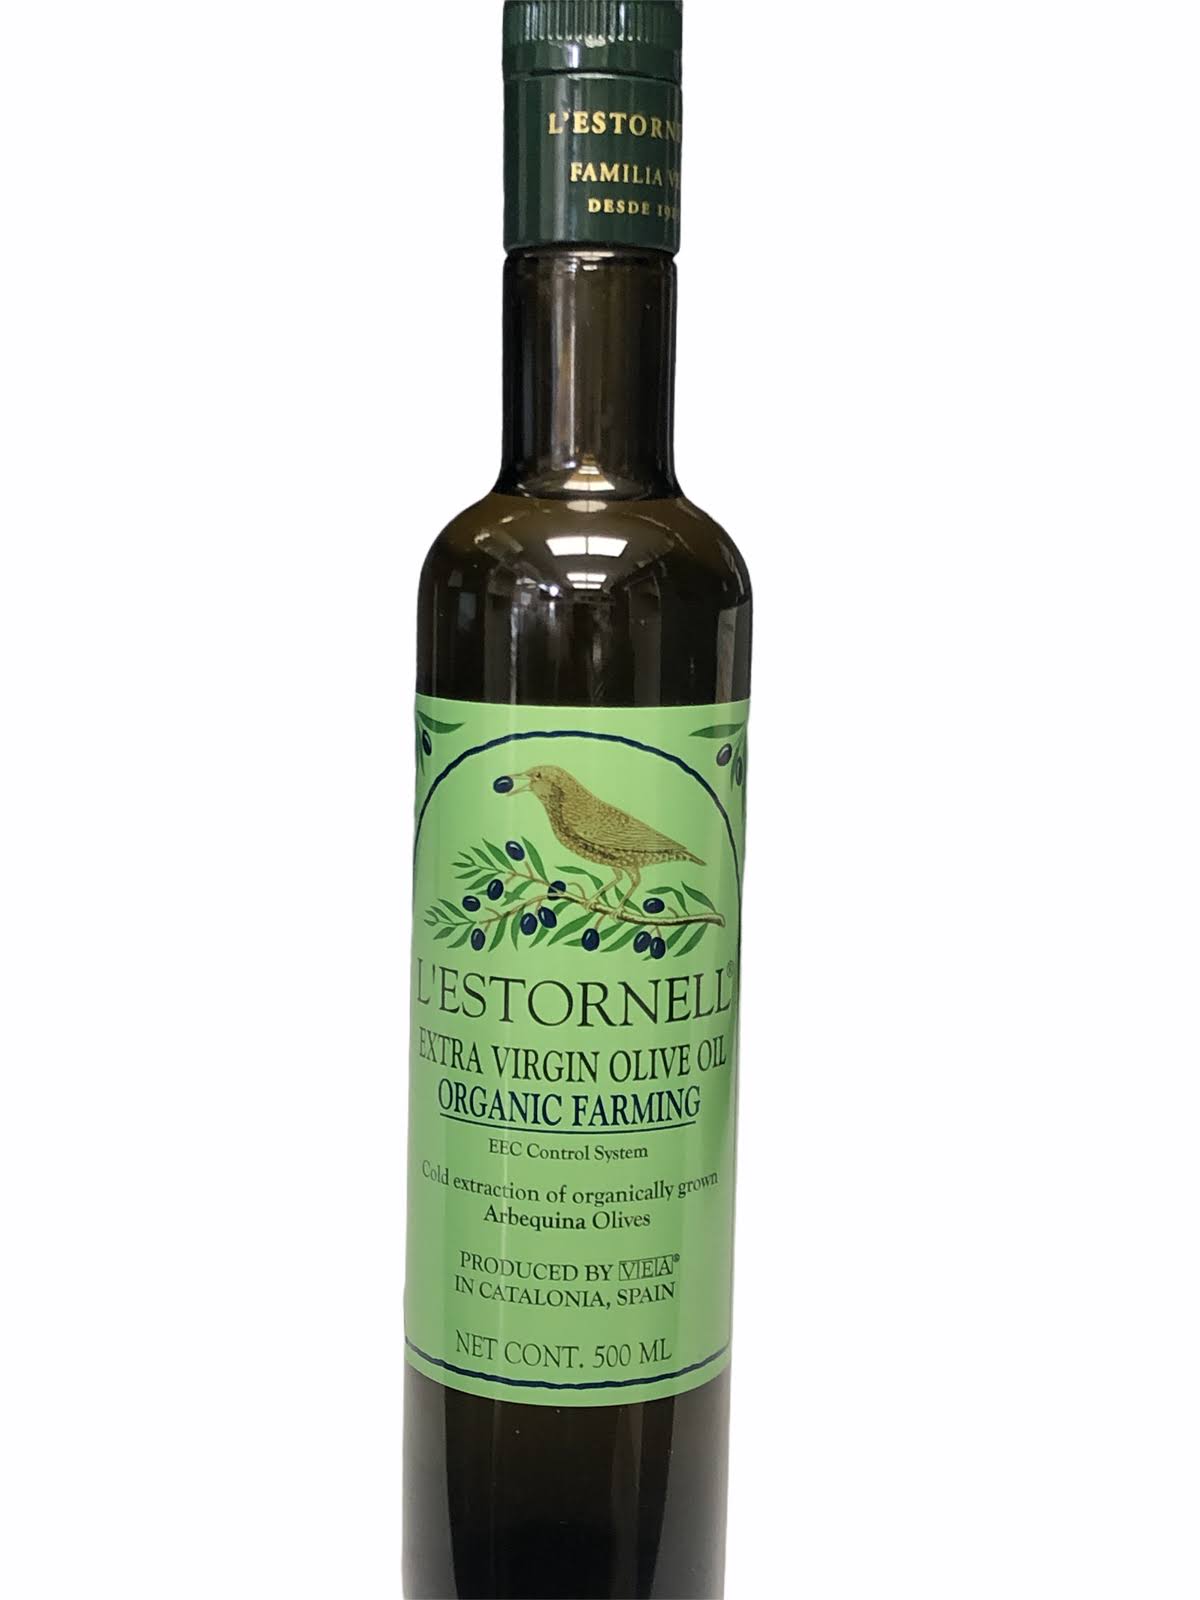 L'Estornell organic arbequina extra virgin olive oil